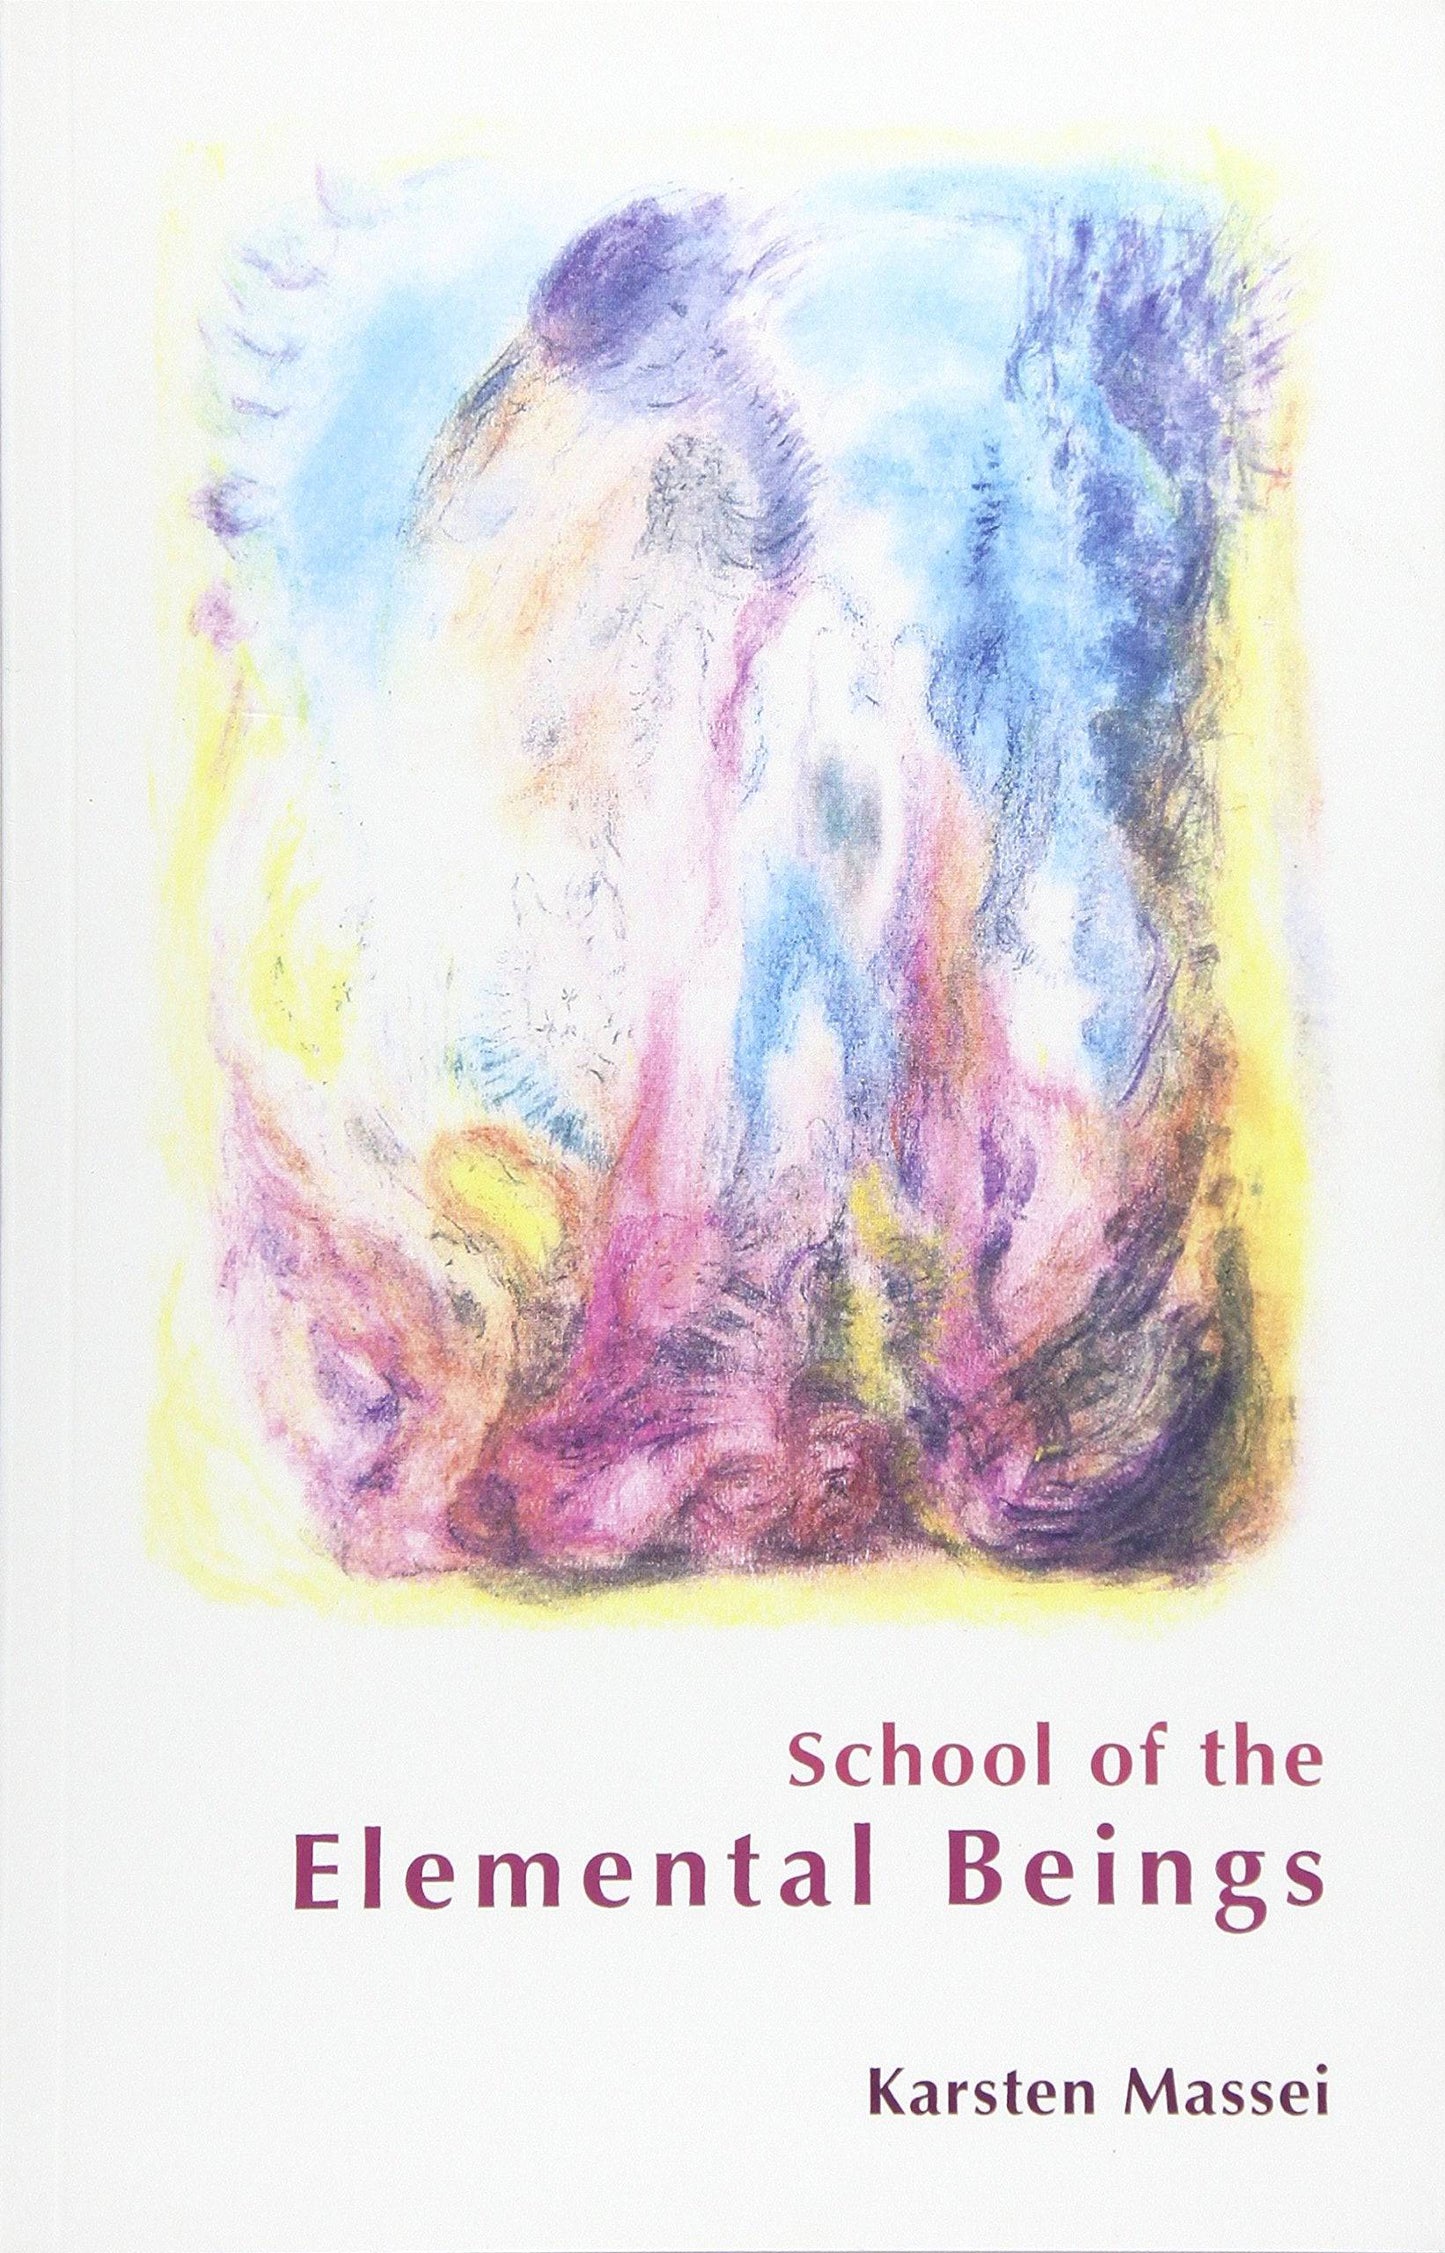 School of Elemental Beings by Karsten Massei - The Josephine Porter Institute